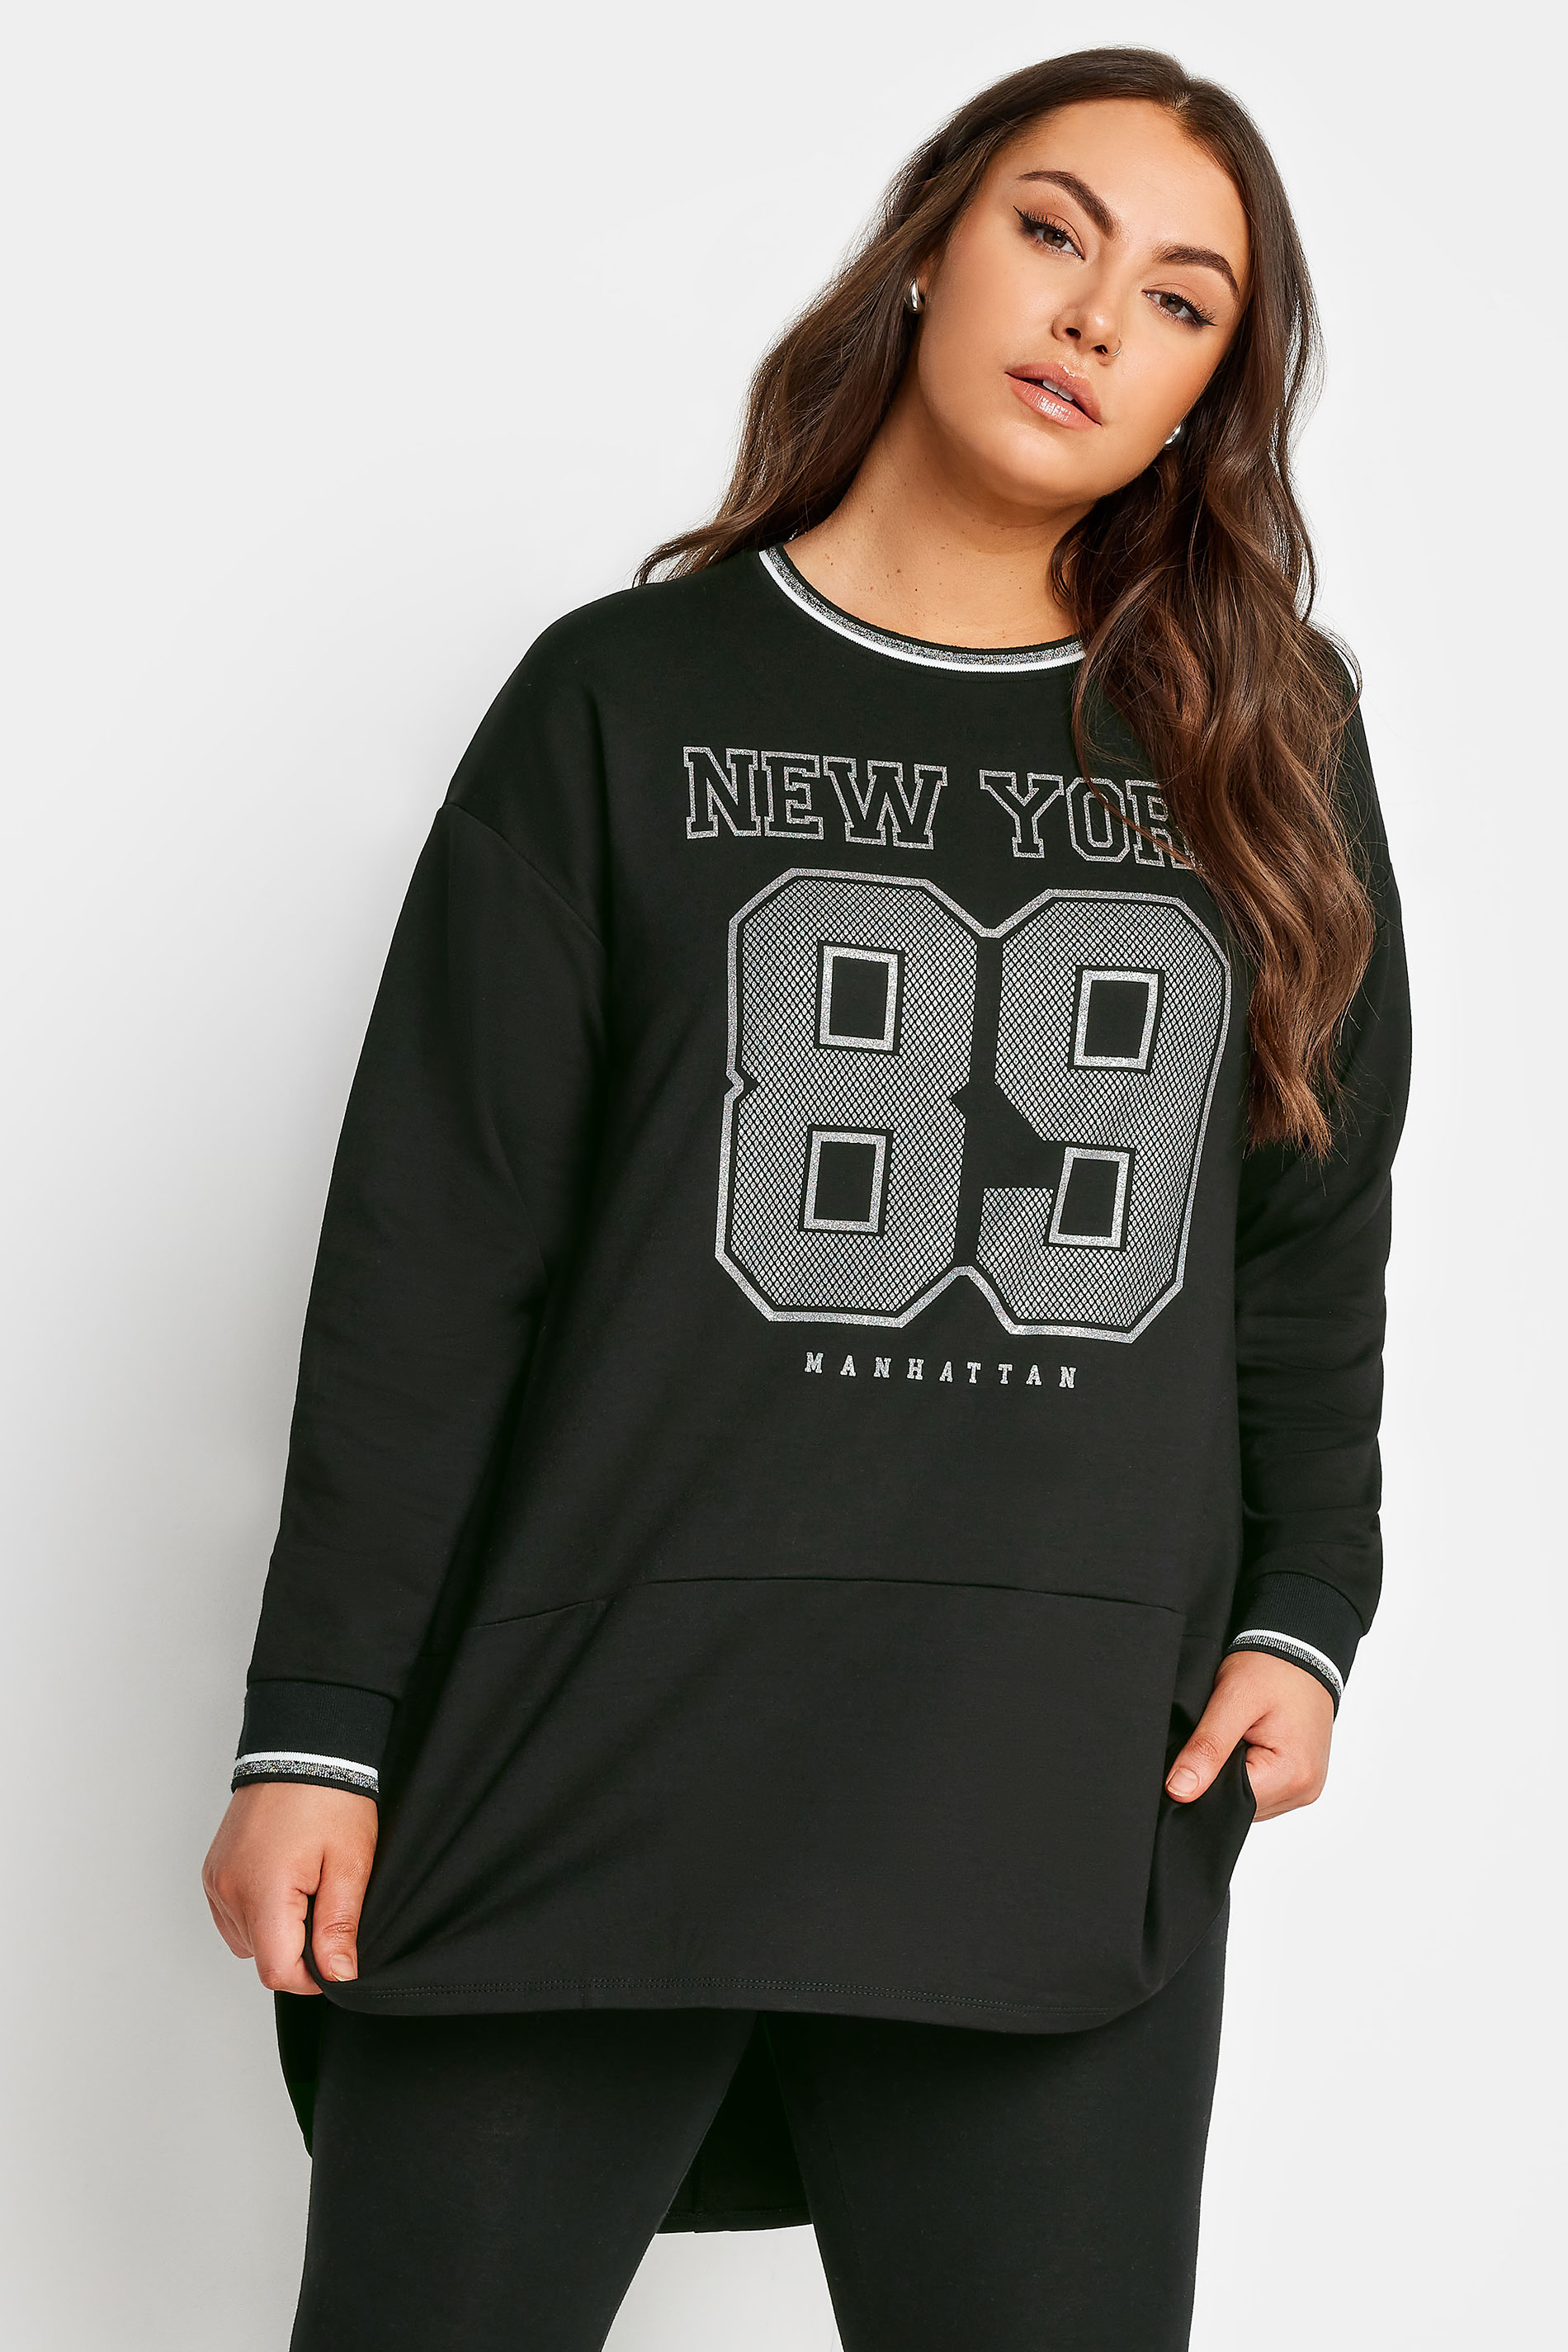 YOURS Plus Size Black 'New York' Glitter Slogan Sweatshirt | Yours Clothing 1